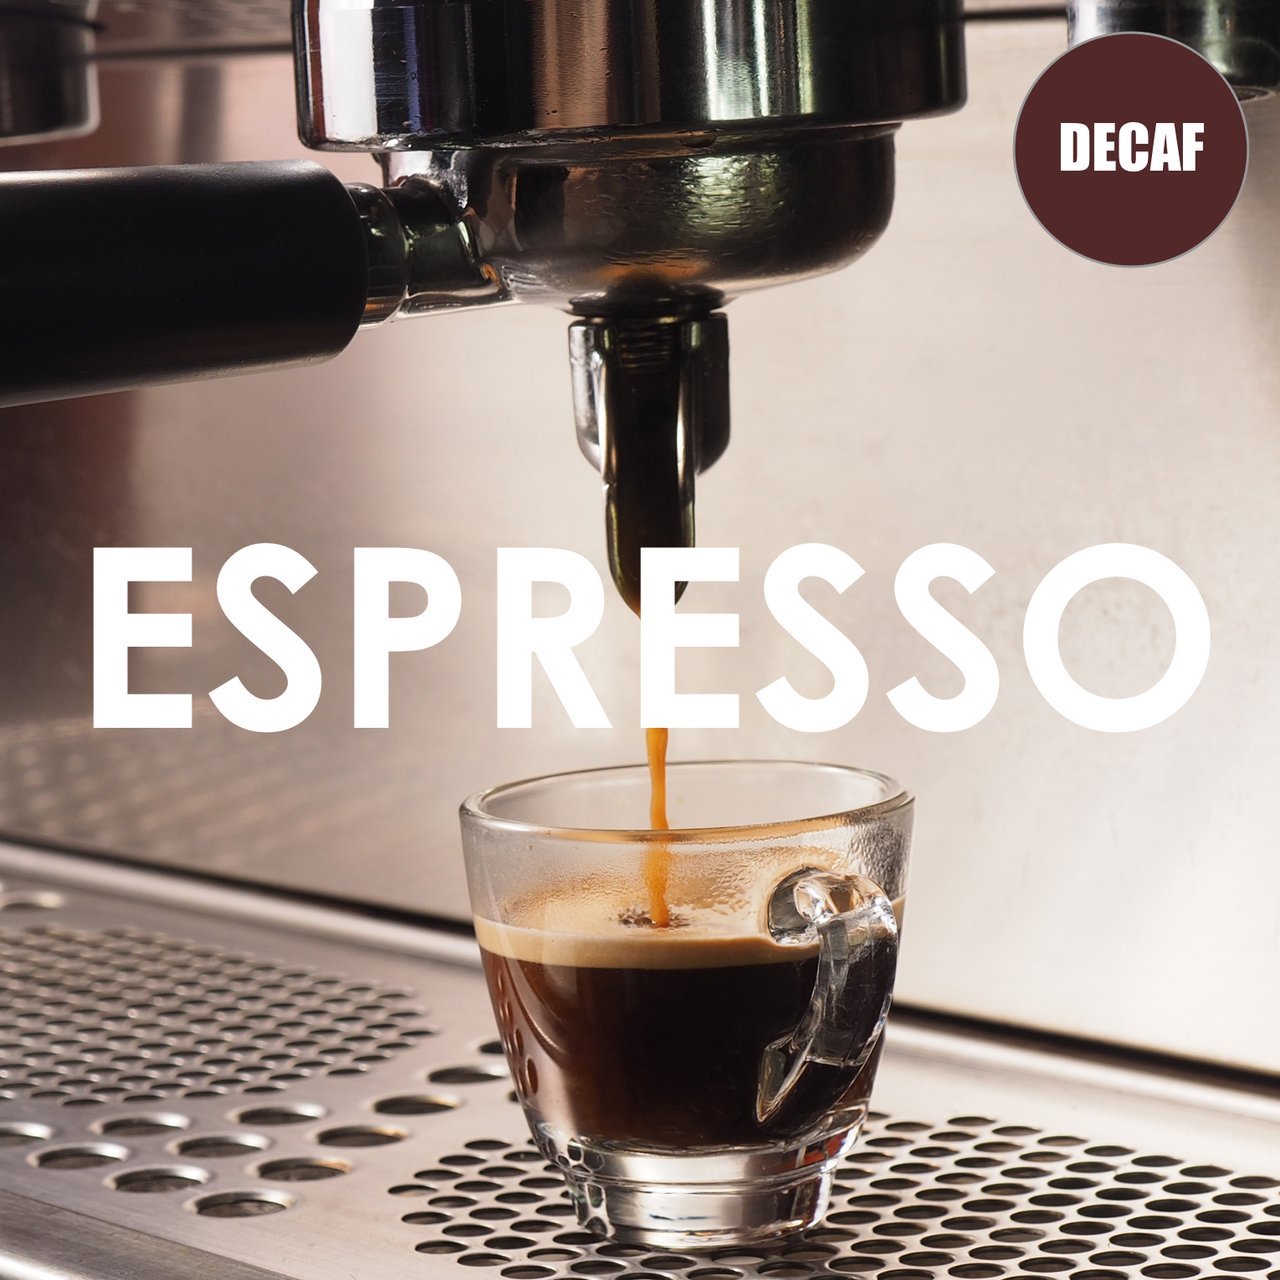 Delta Decaffeinated Roasted Ground Coffee for Espresso Machine or Bag 250g